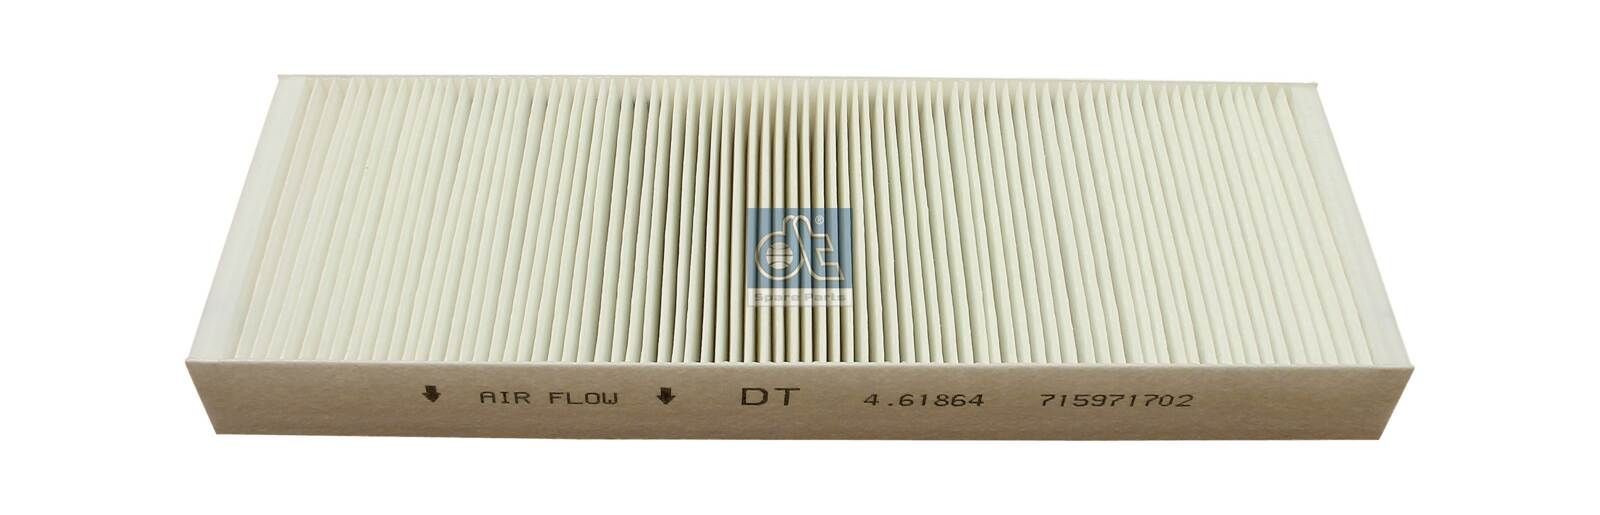 CU 3869 DT Spare Parts 4.61864 Pollen filter 0008301118